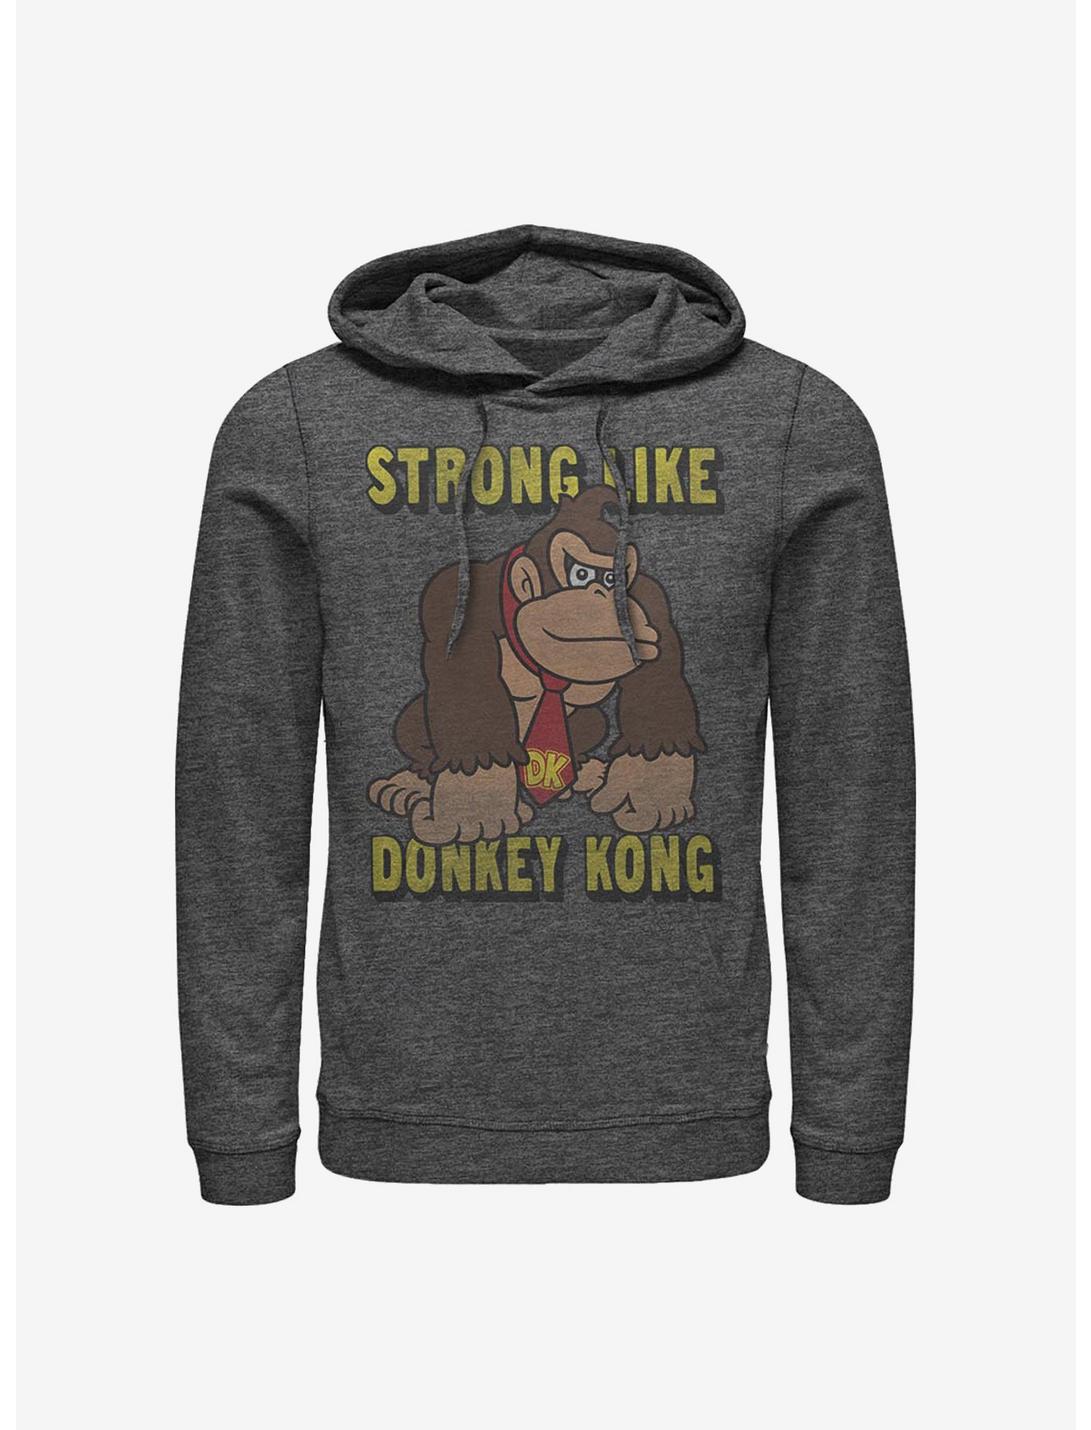 Nintendo Donkey Kong Strong Donkey Hoodie, CHAR HTR, hi-res